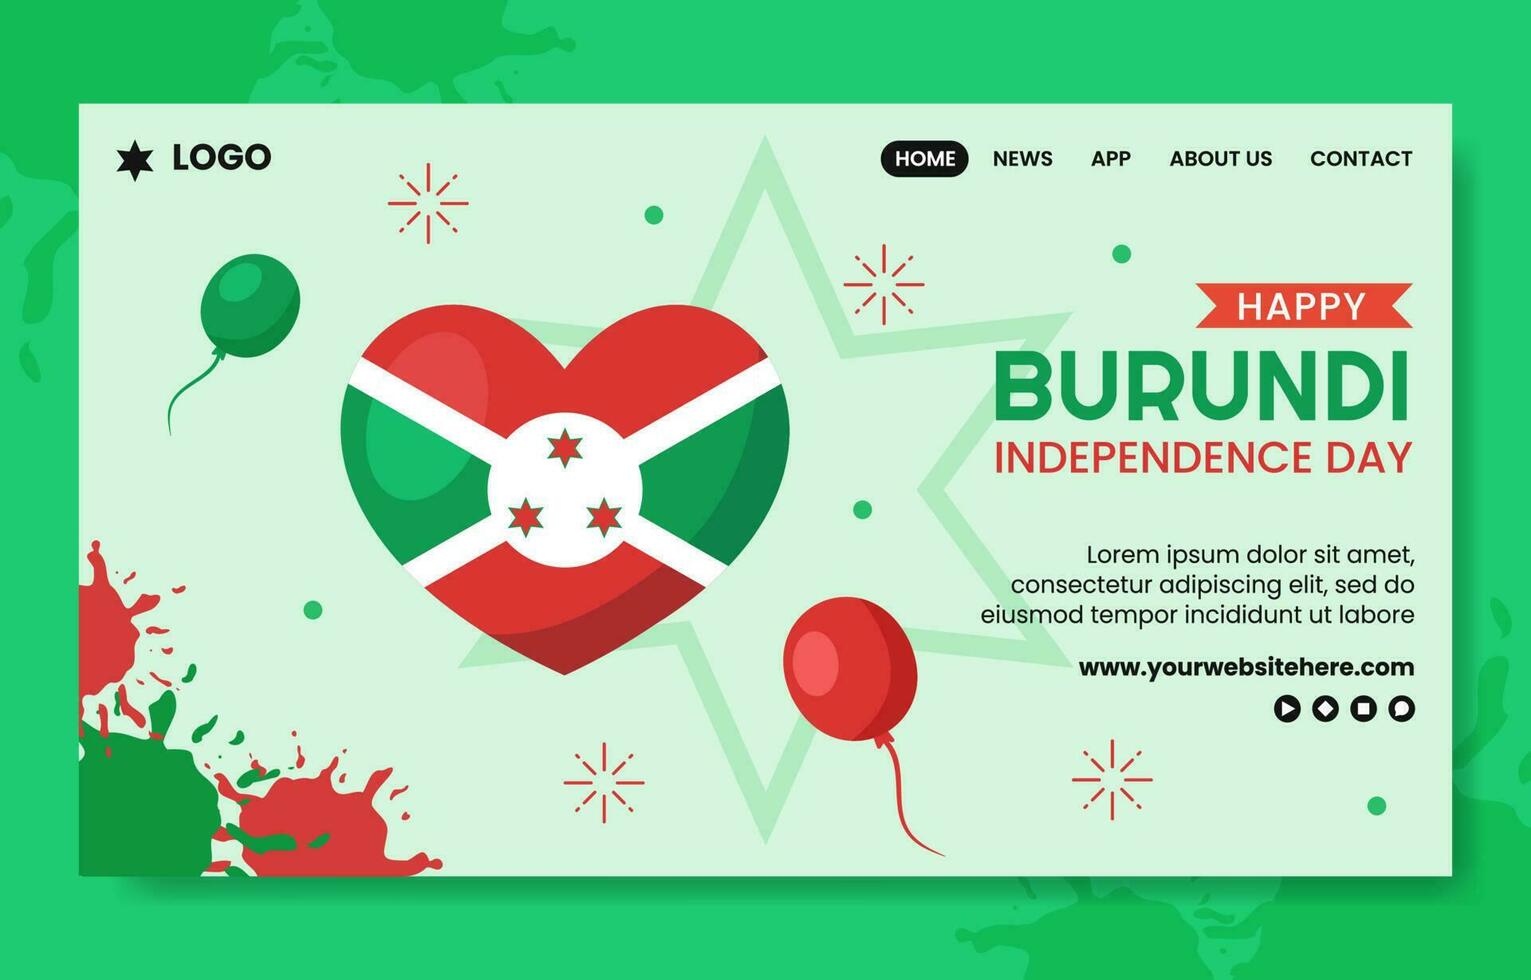 Burundi Independence Day Social Media Landing Page Flat Cartoon Hand Drawn Template Illustration vector